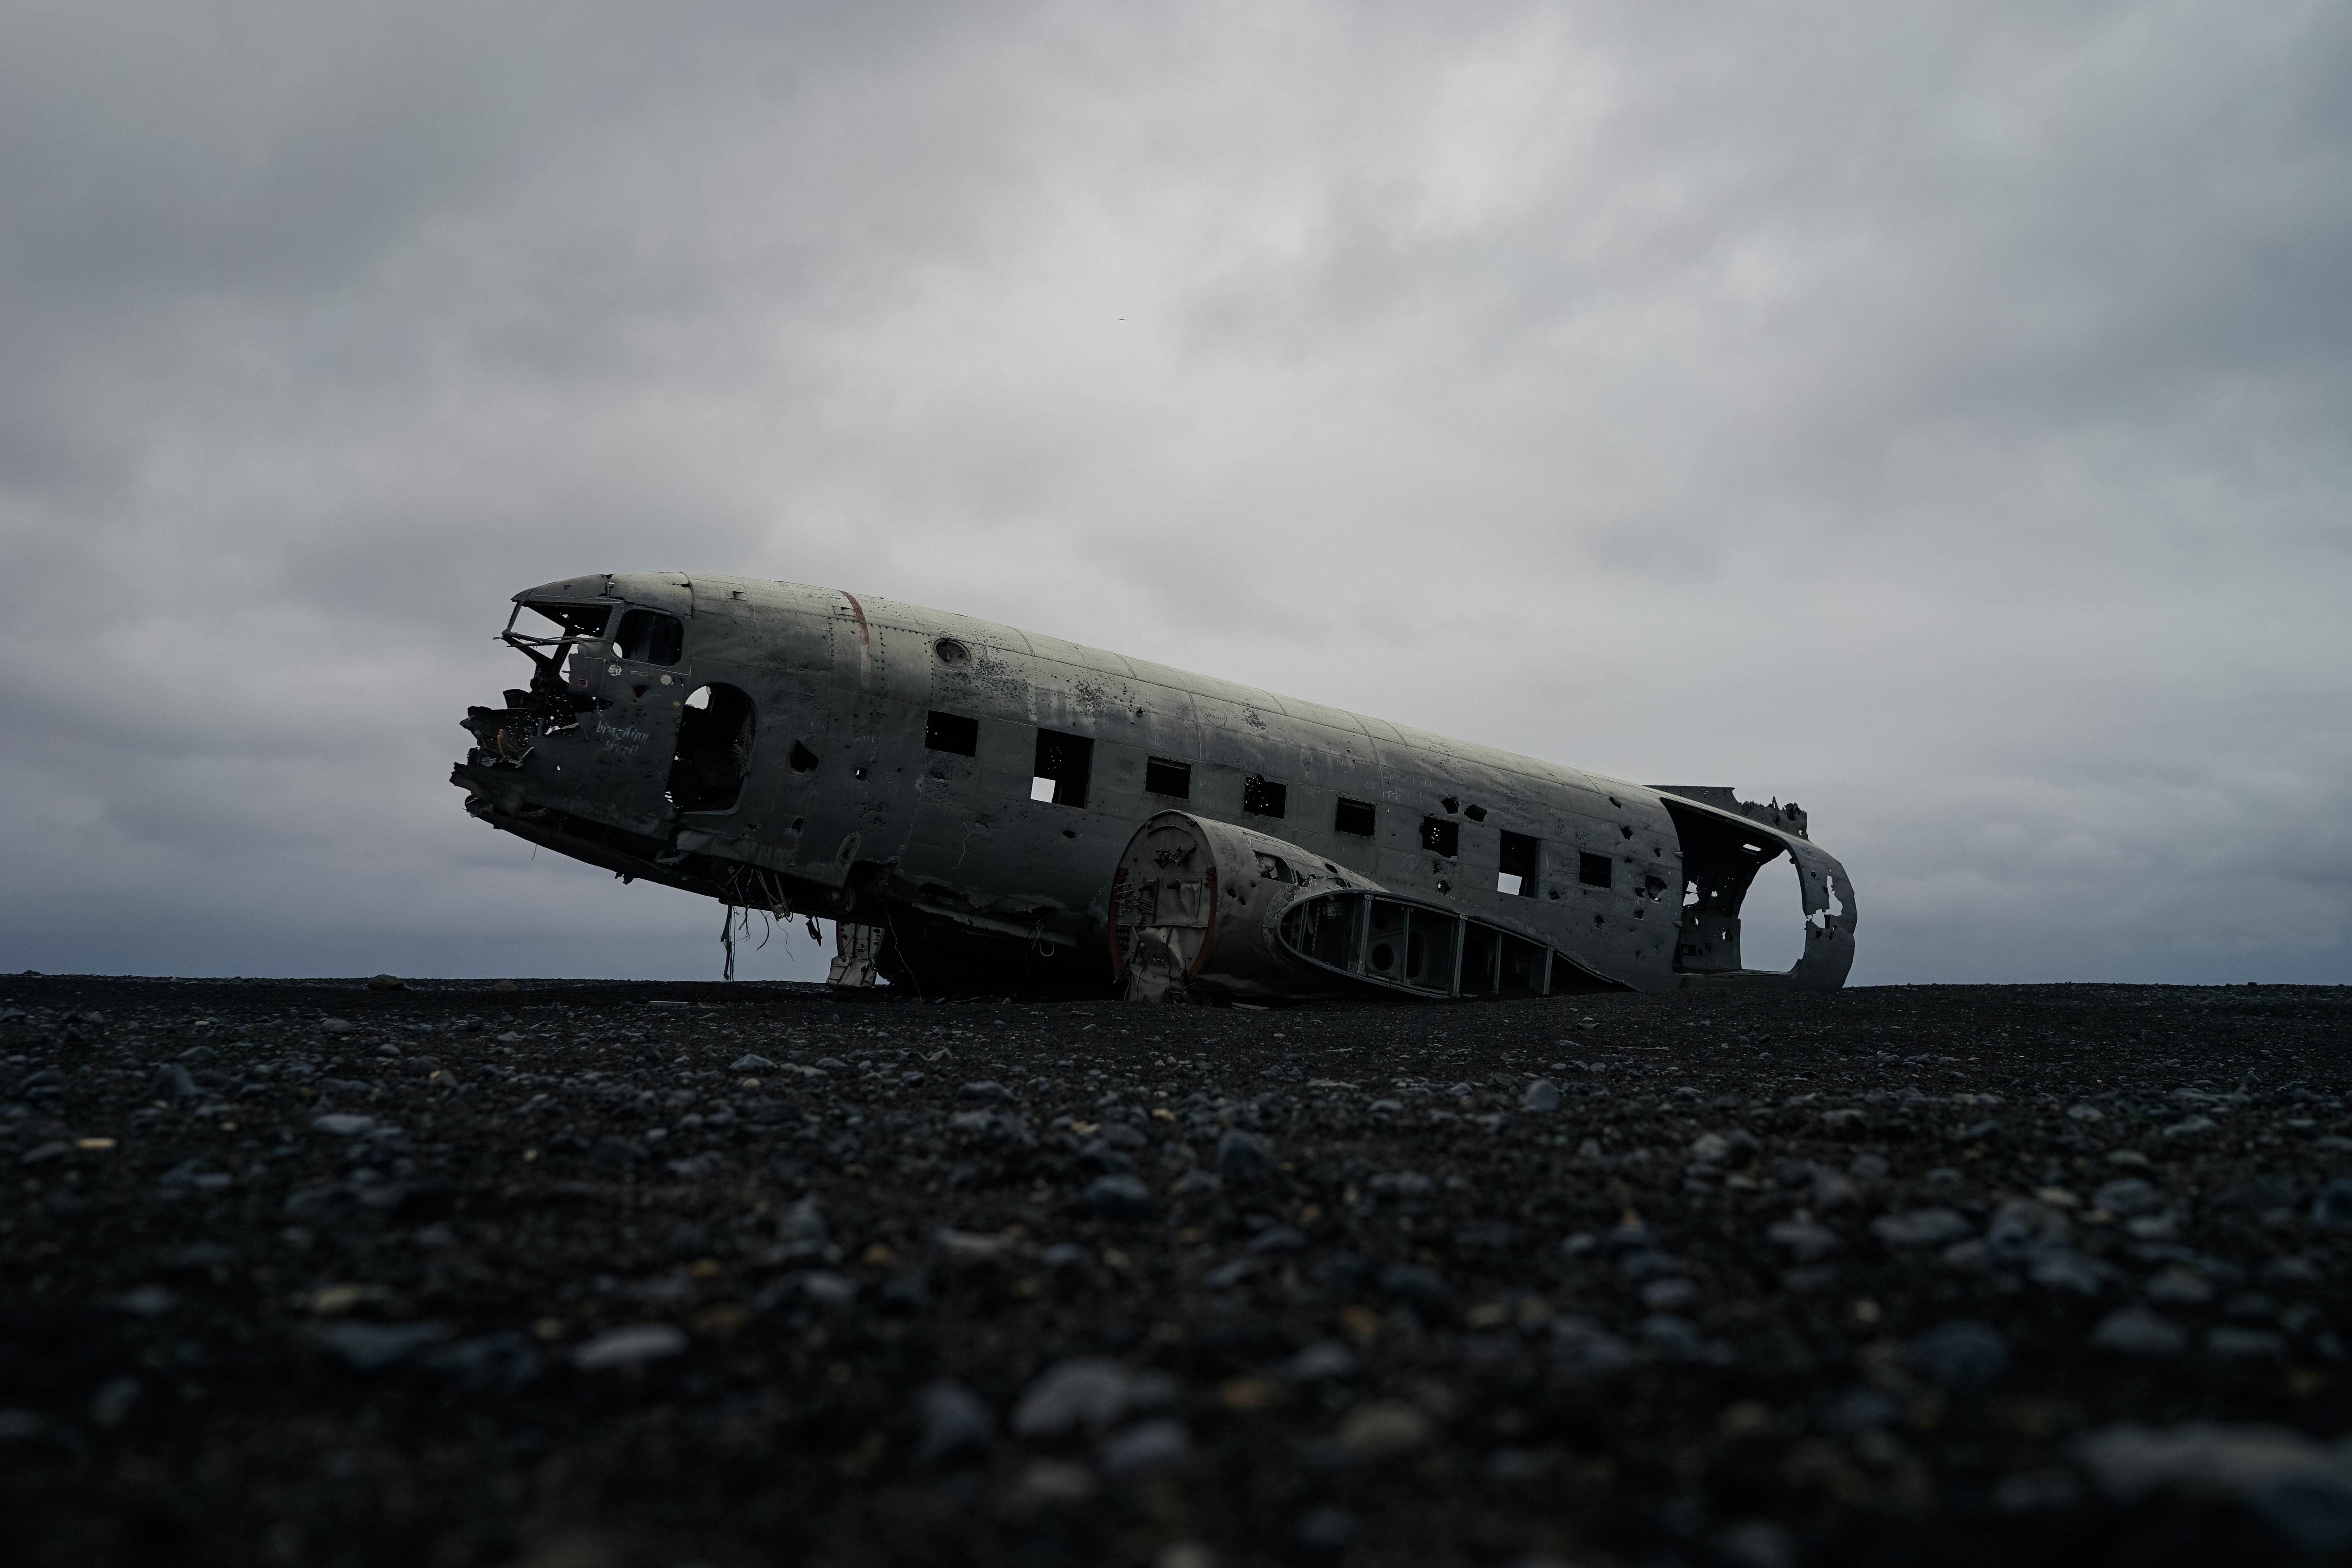 Solheimasandur Plane Wreck Iceland 4K wallpaper